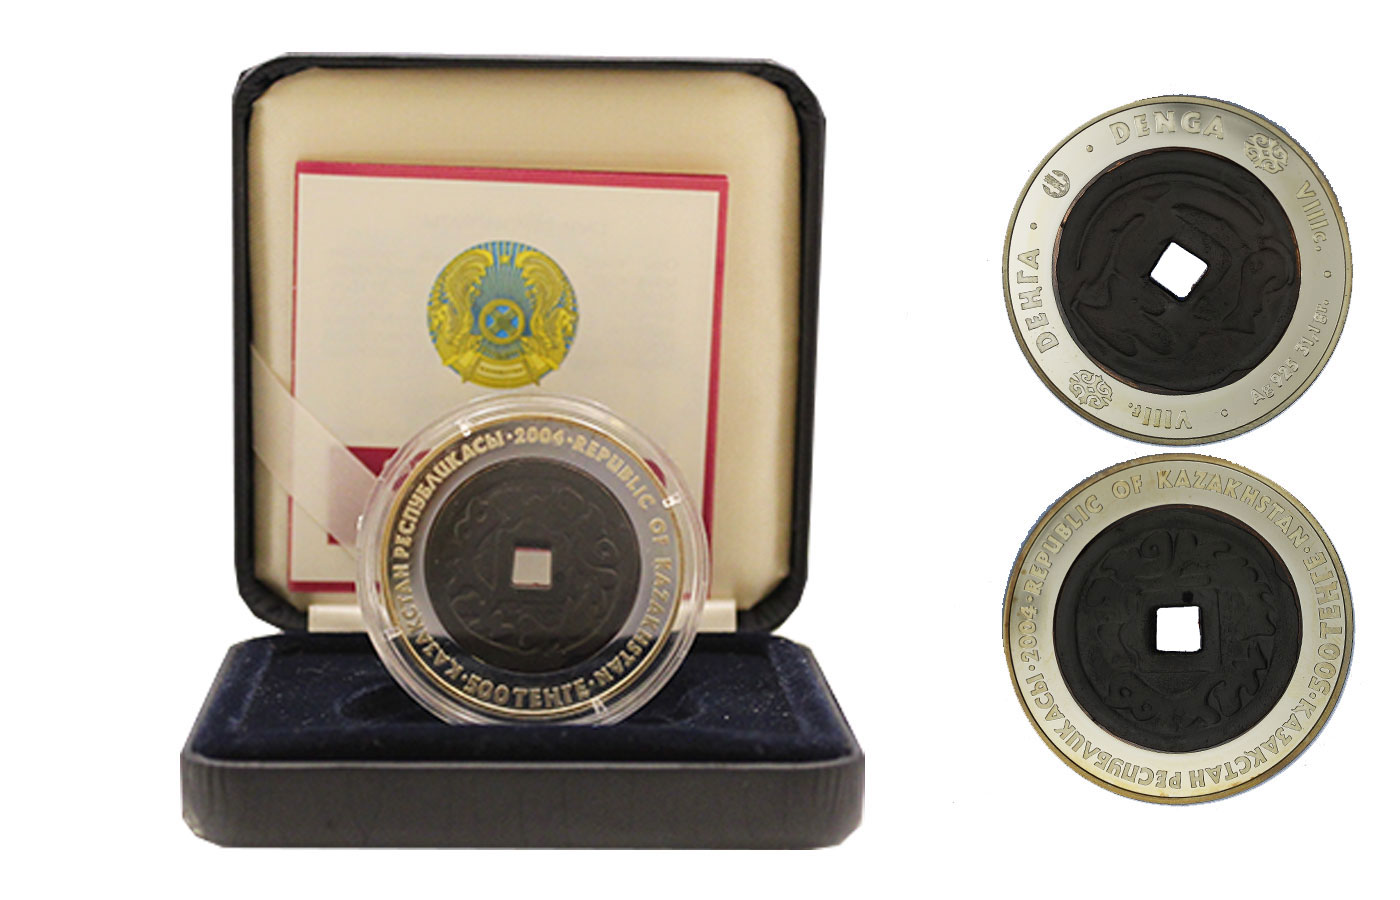 "Monete antiche: Denga" - 500 Tenge gr. 31,10 in arg. 925/ - In conf. originale